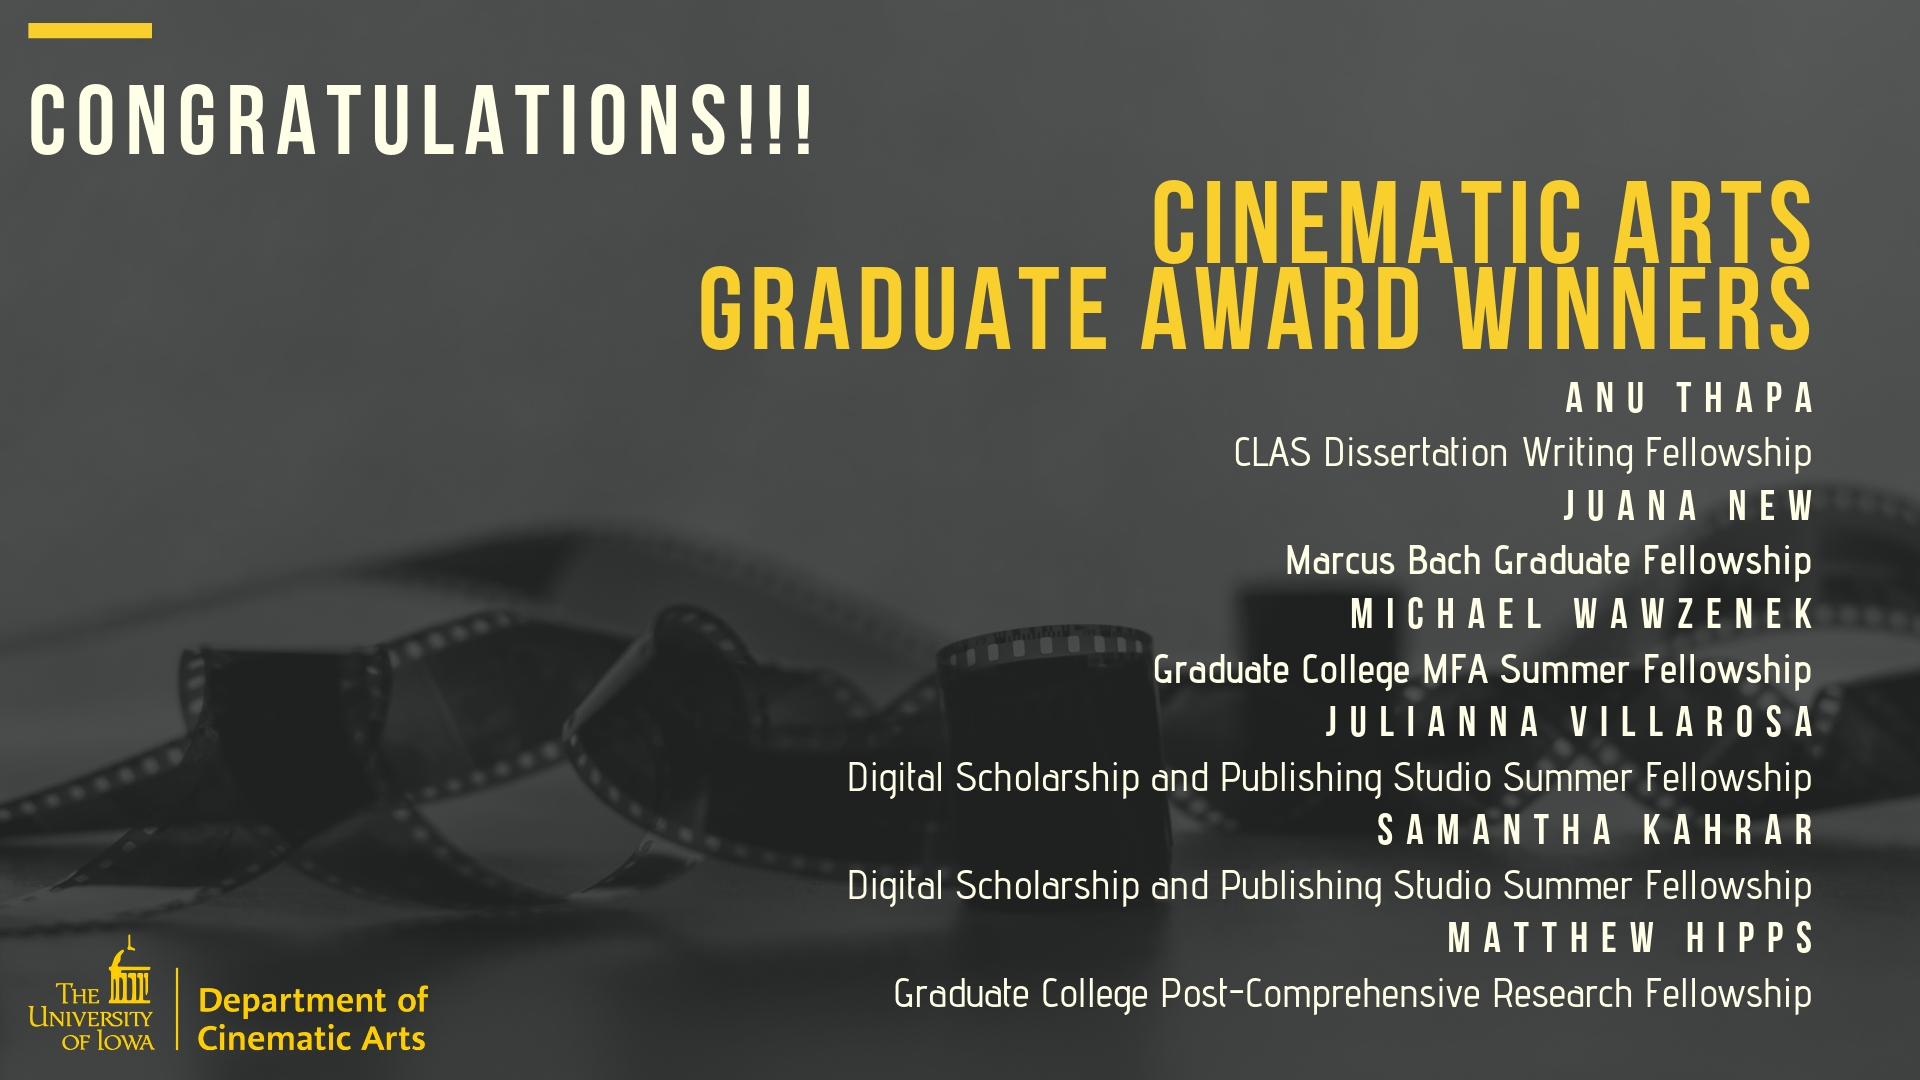 Congratulations cinematic arts graduate award winners!